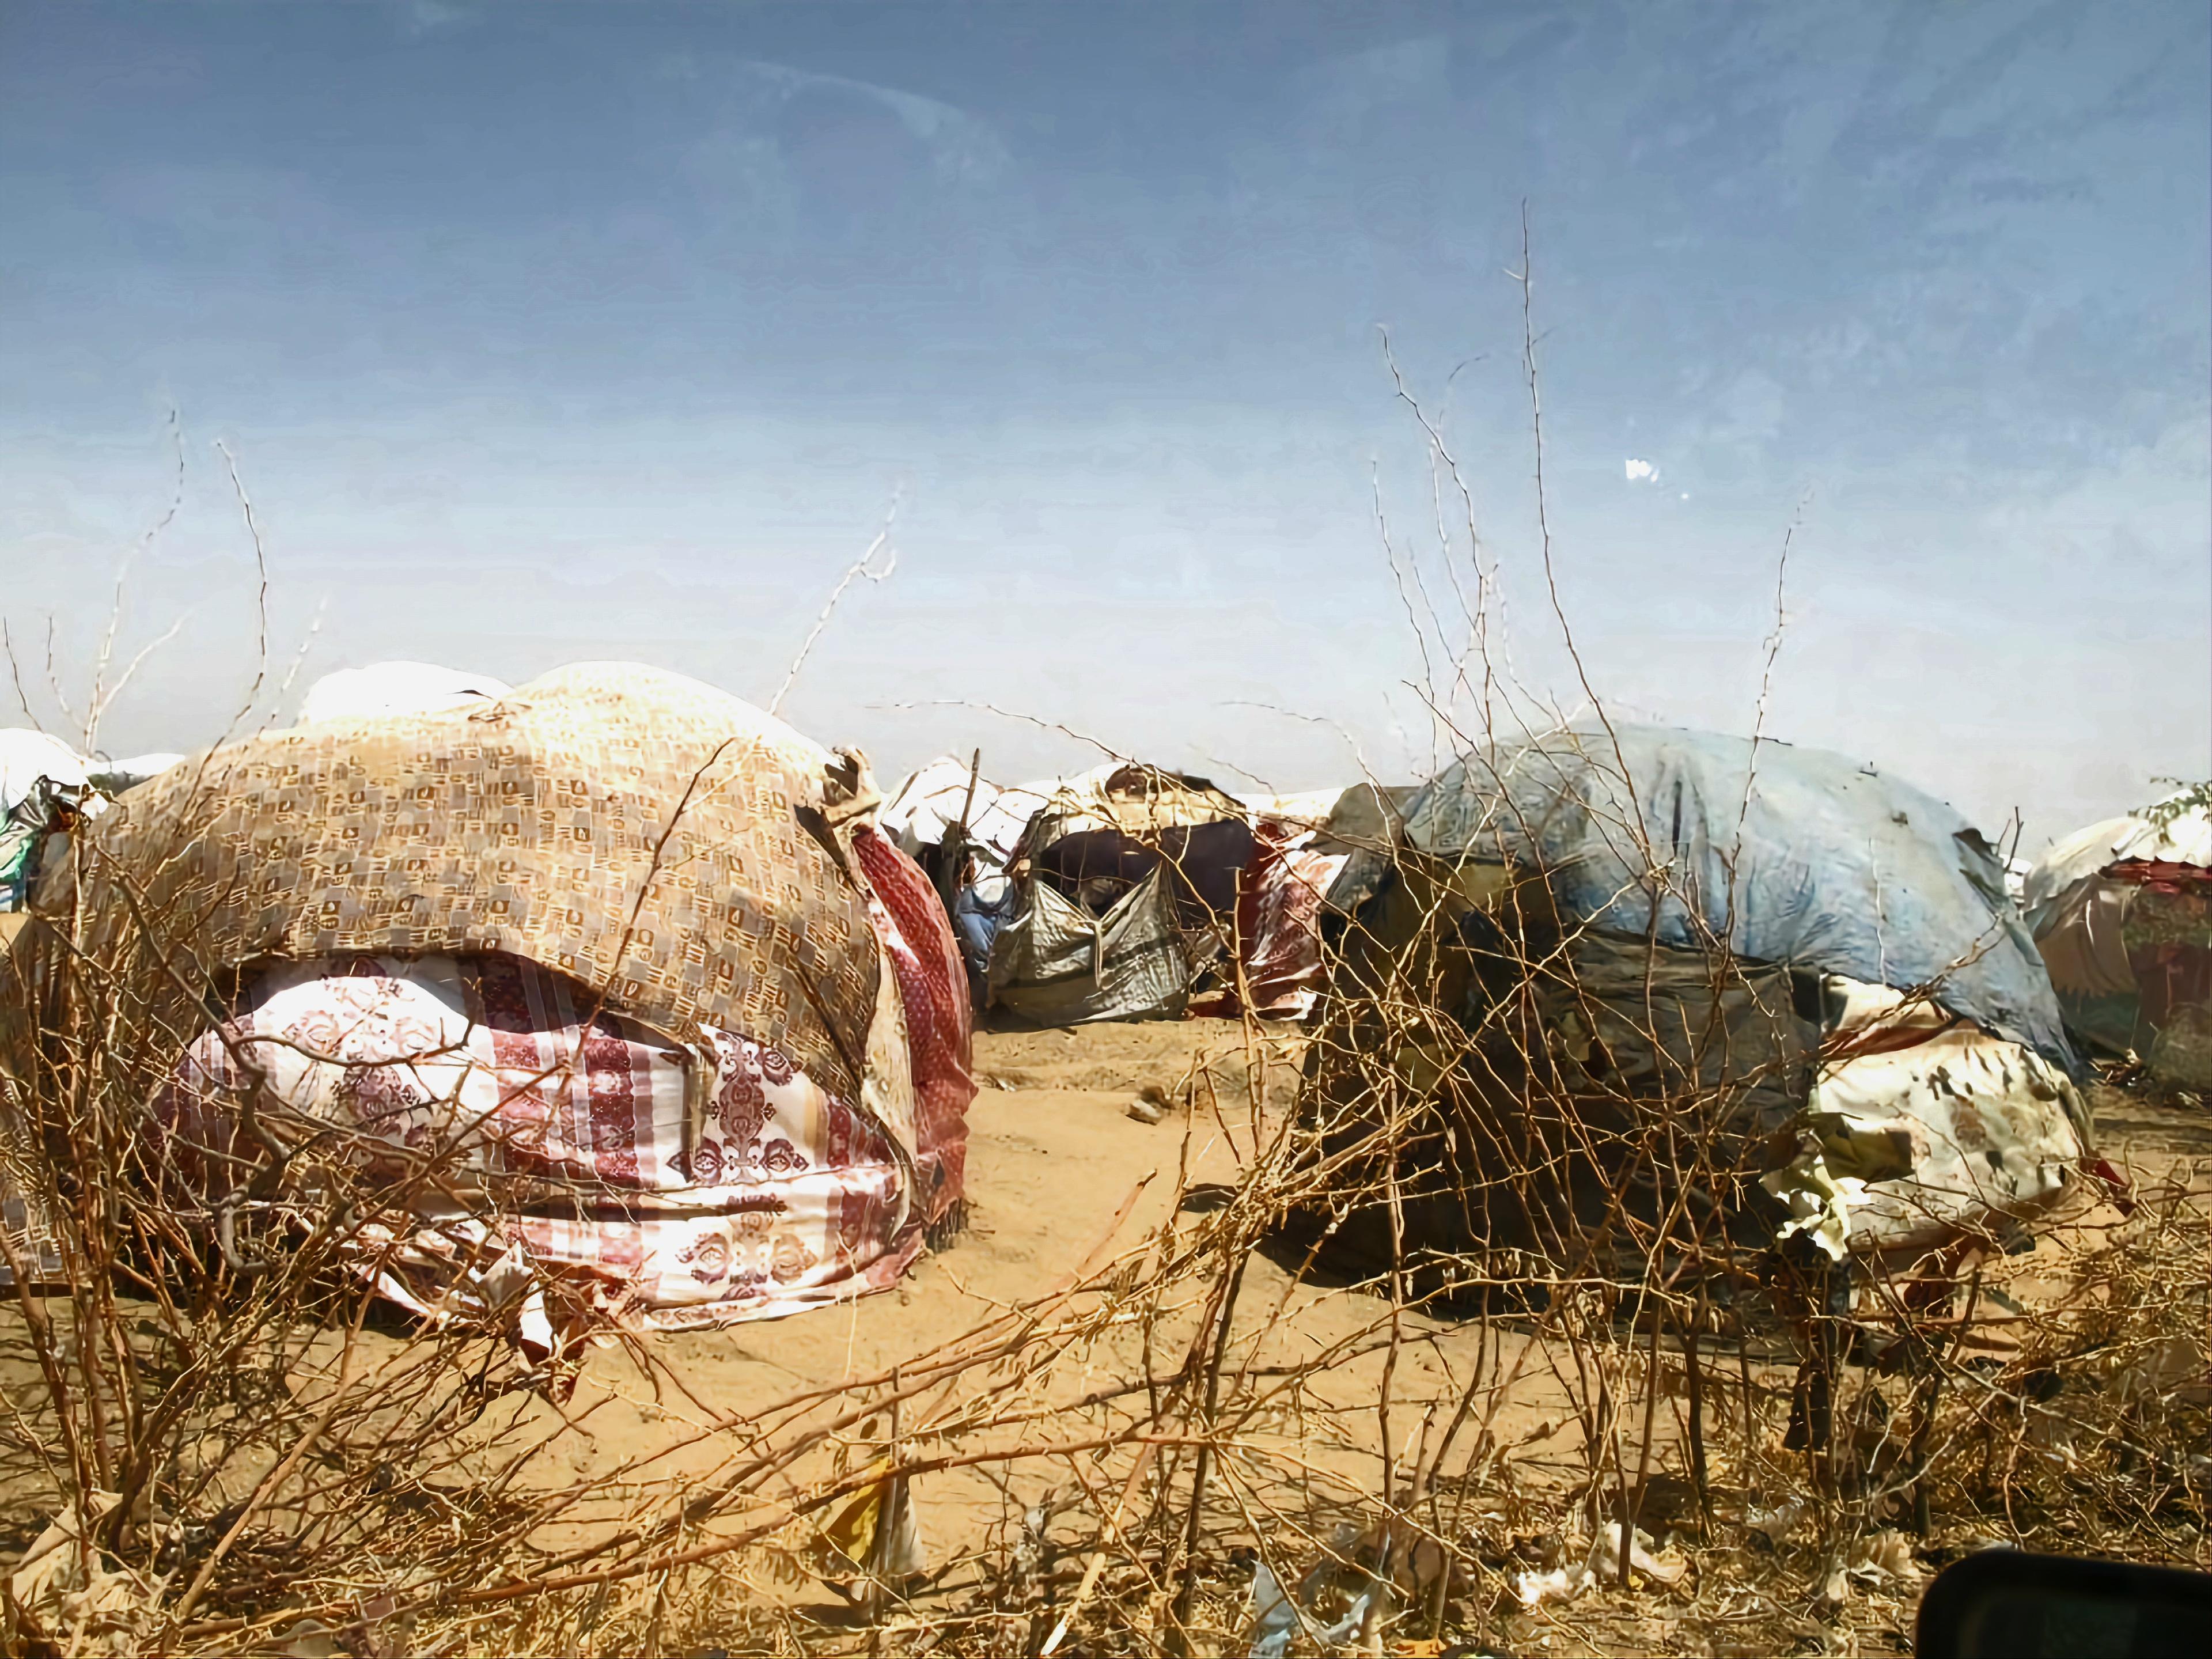 View of refugee shelters outside Dagahaley camp, Dadaab, Kenya 